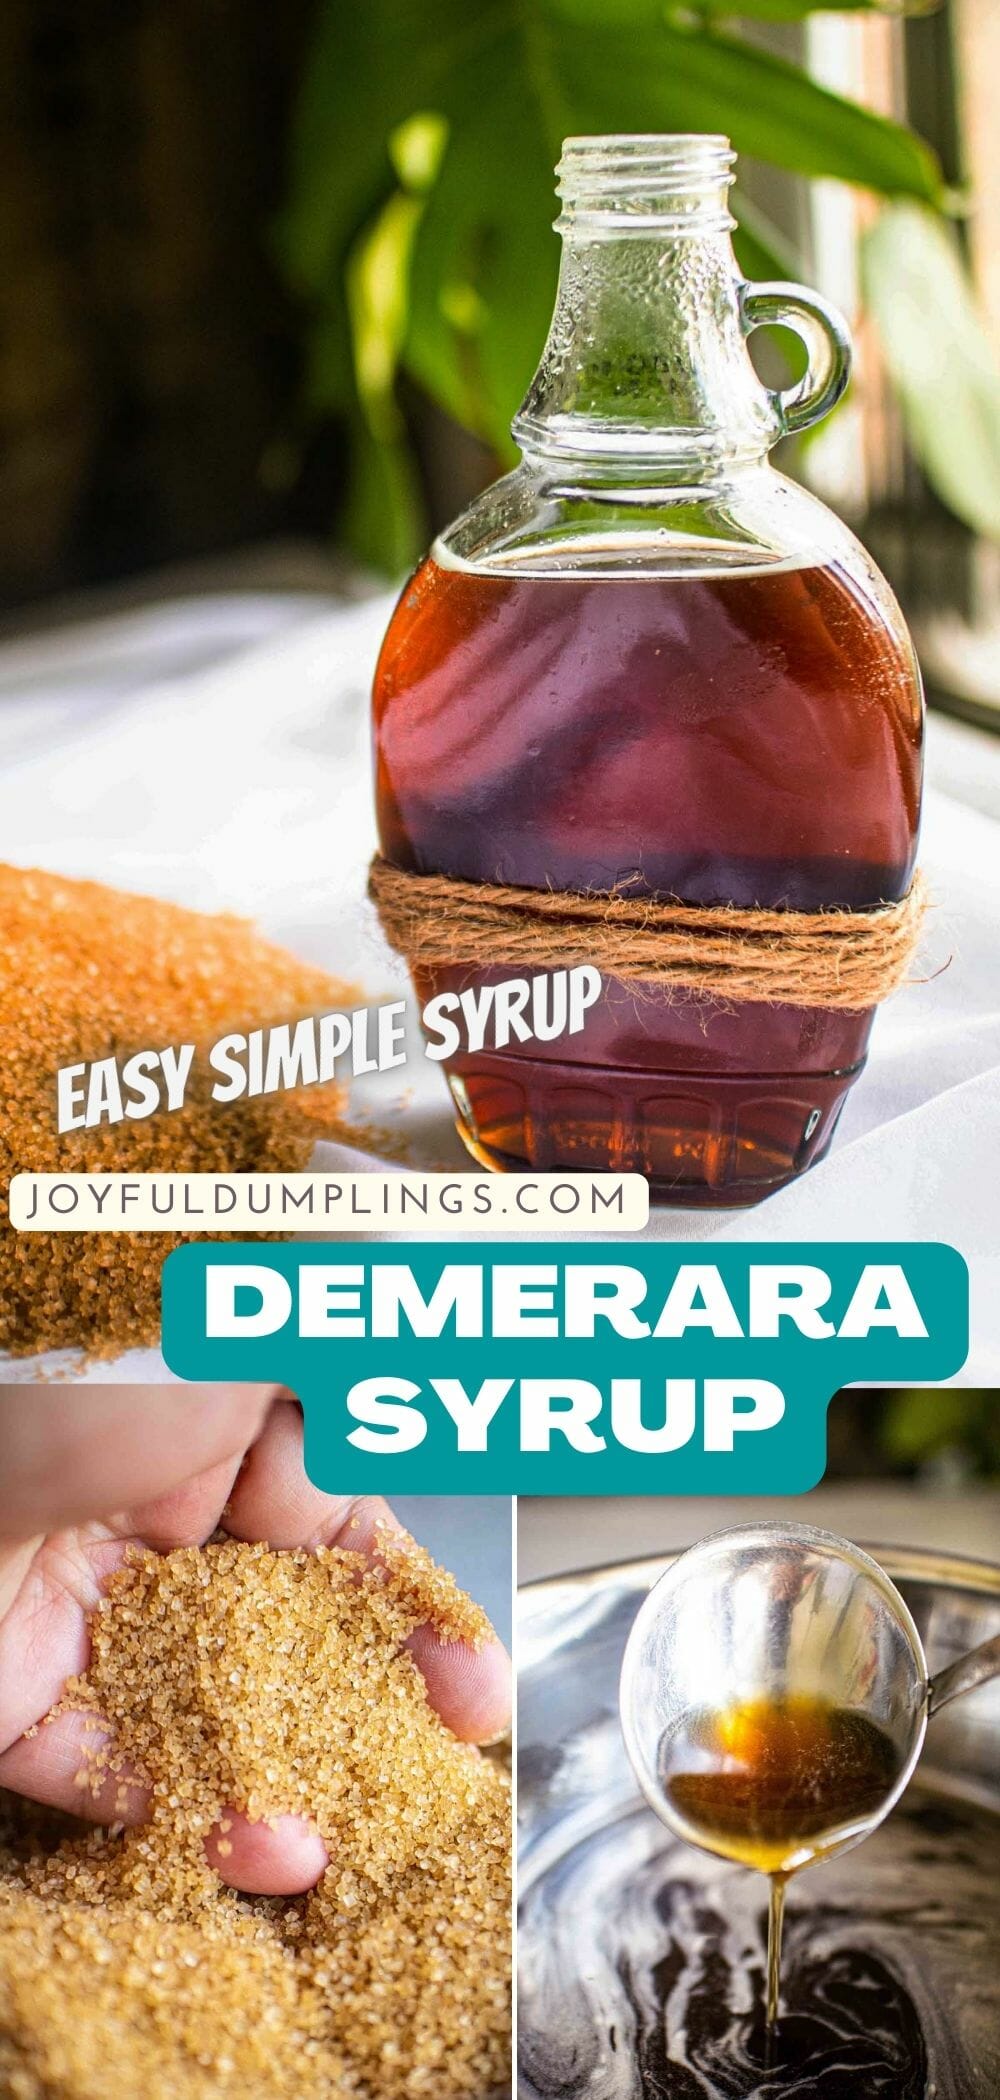 rich demerara syrup in a bottle